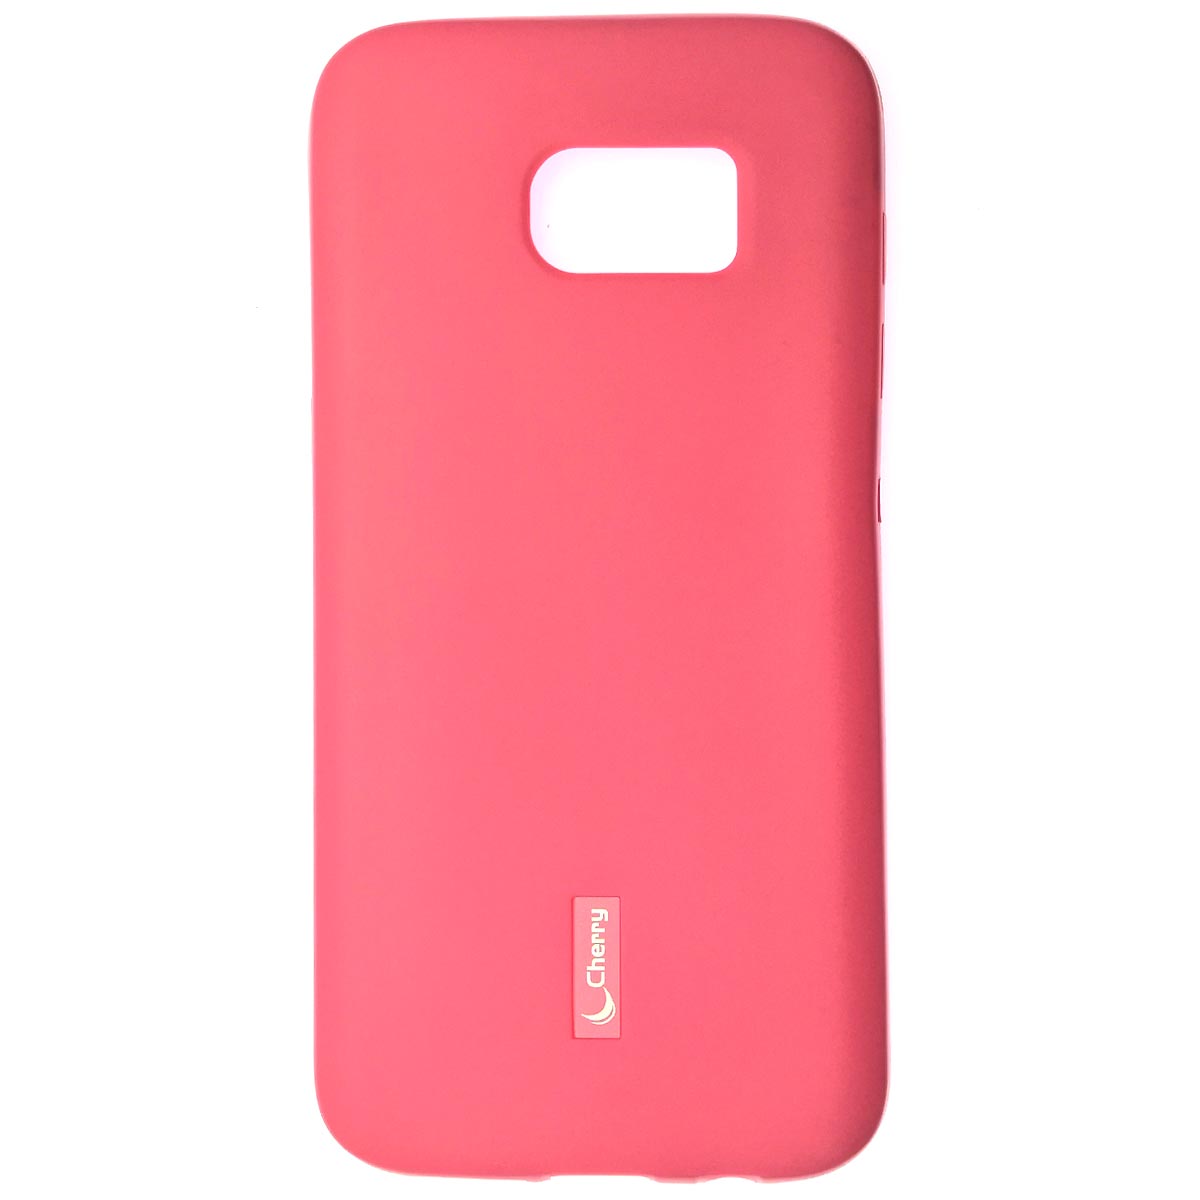 Чехол накладка Cherry для SAMSUNG Galaxy S7 Edge (SM-G935), силикон, цвет розовый